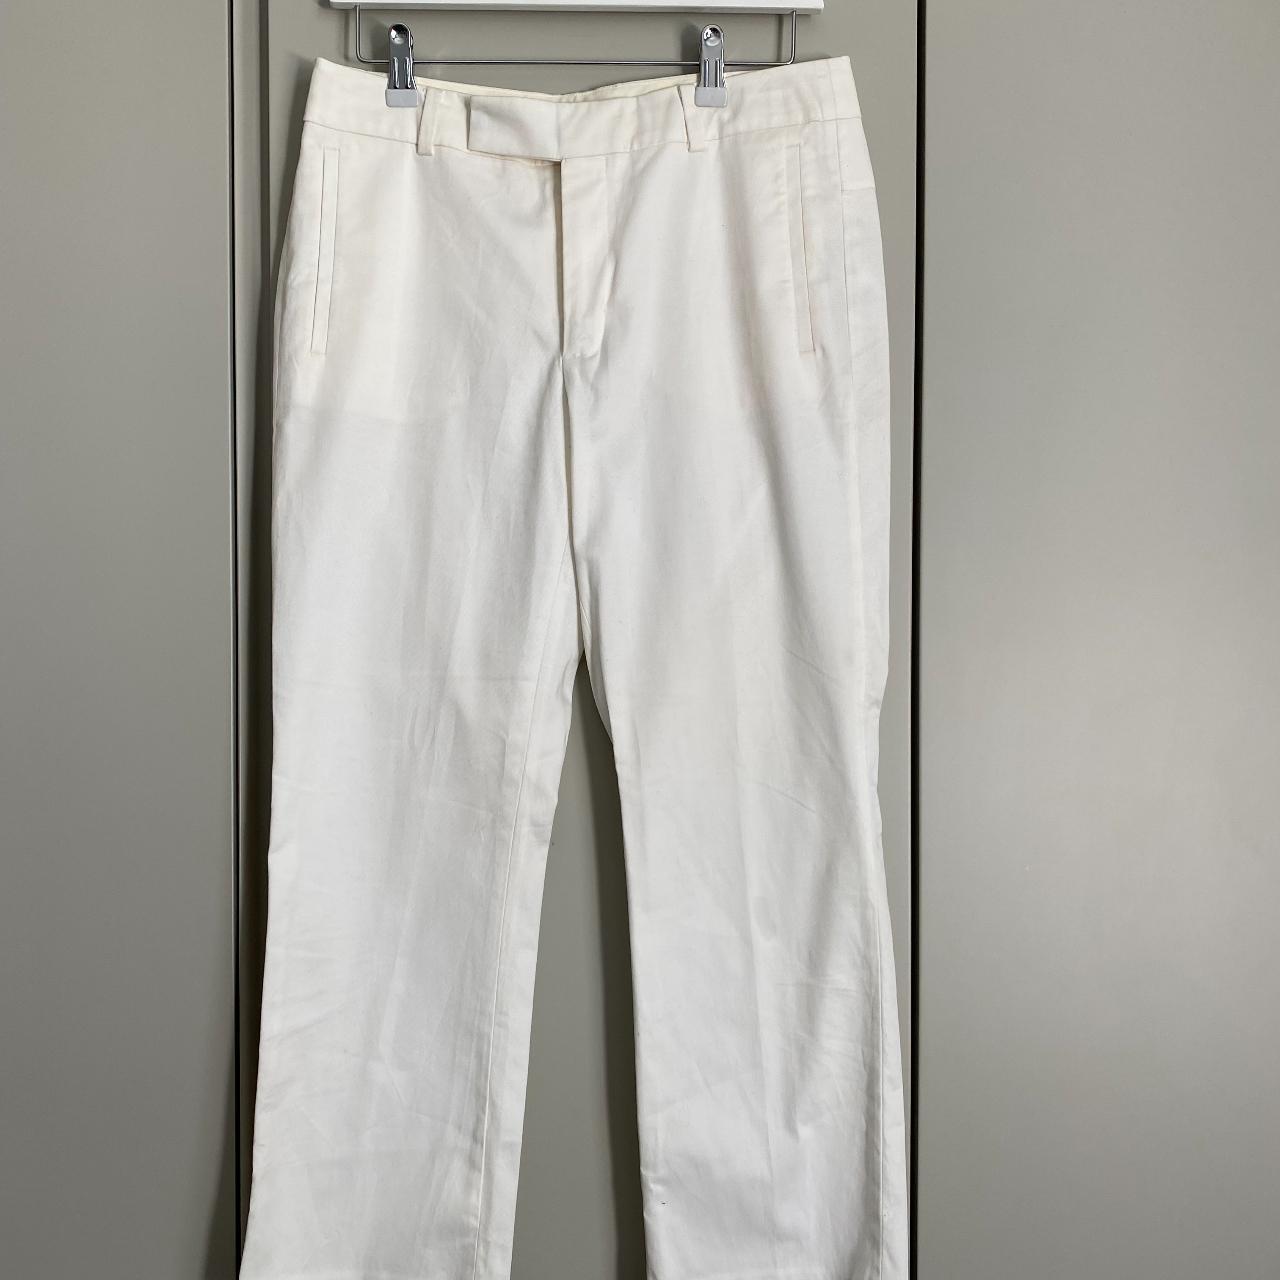 Stills cream Trousers Size EU 38 / UK 10 - Depop